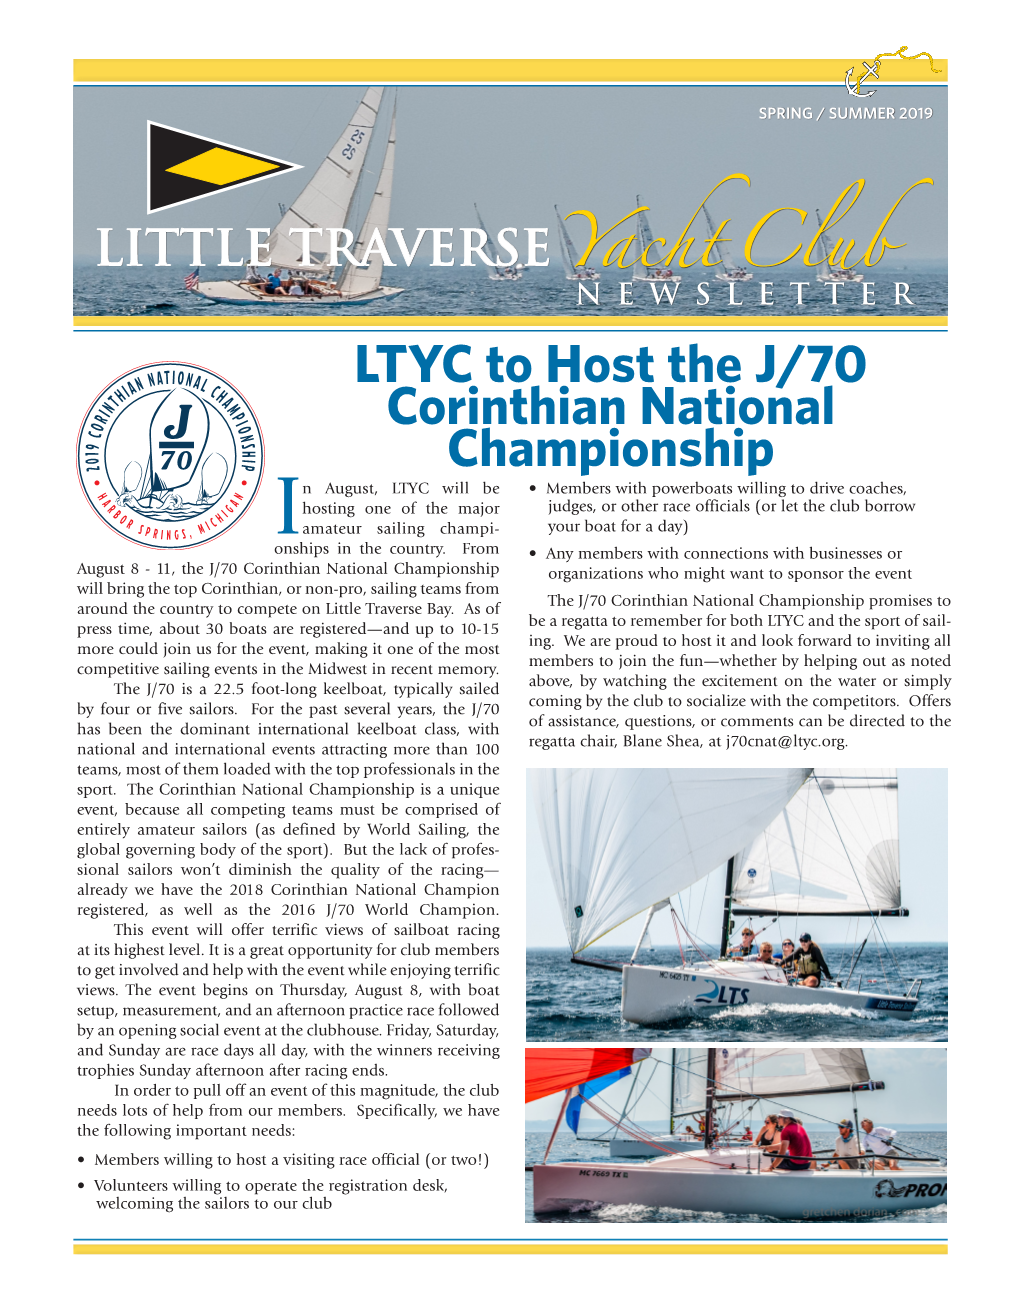 LTYC to Host the J/70 Corinthian National Championship